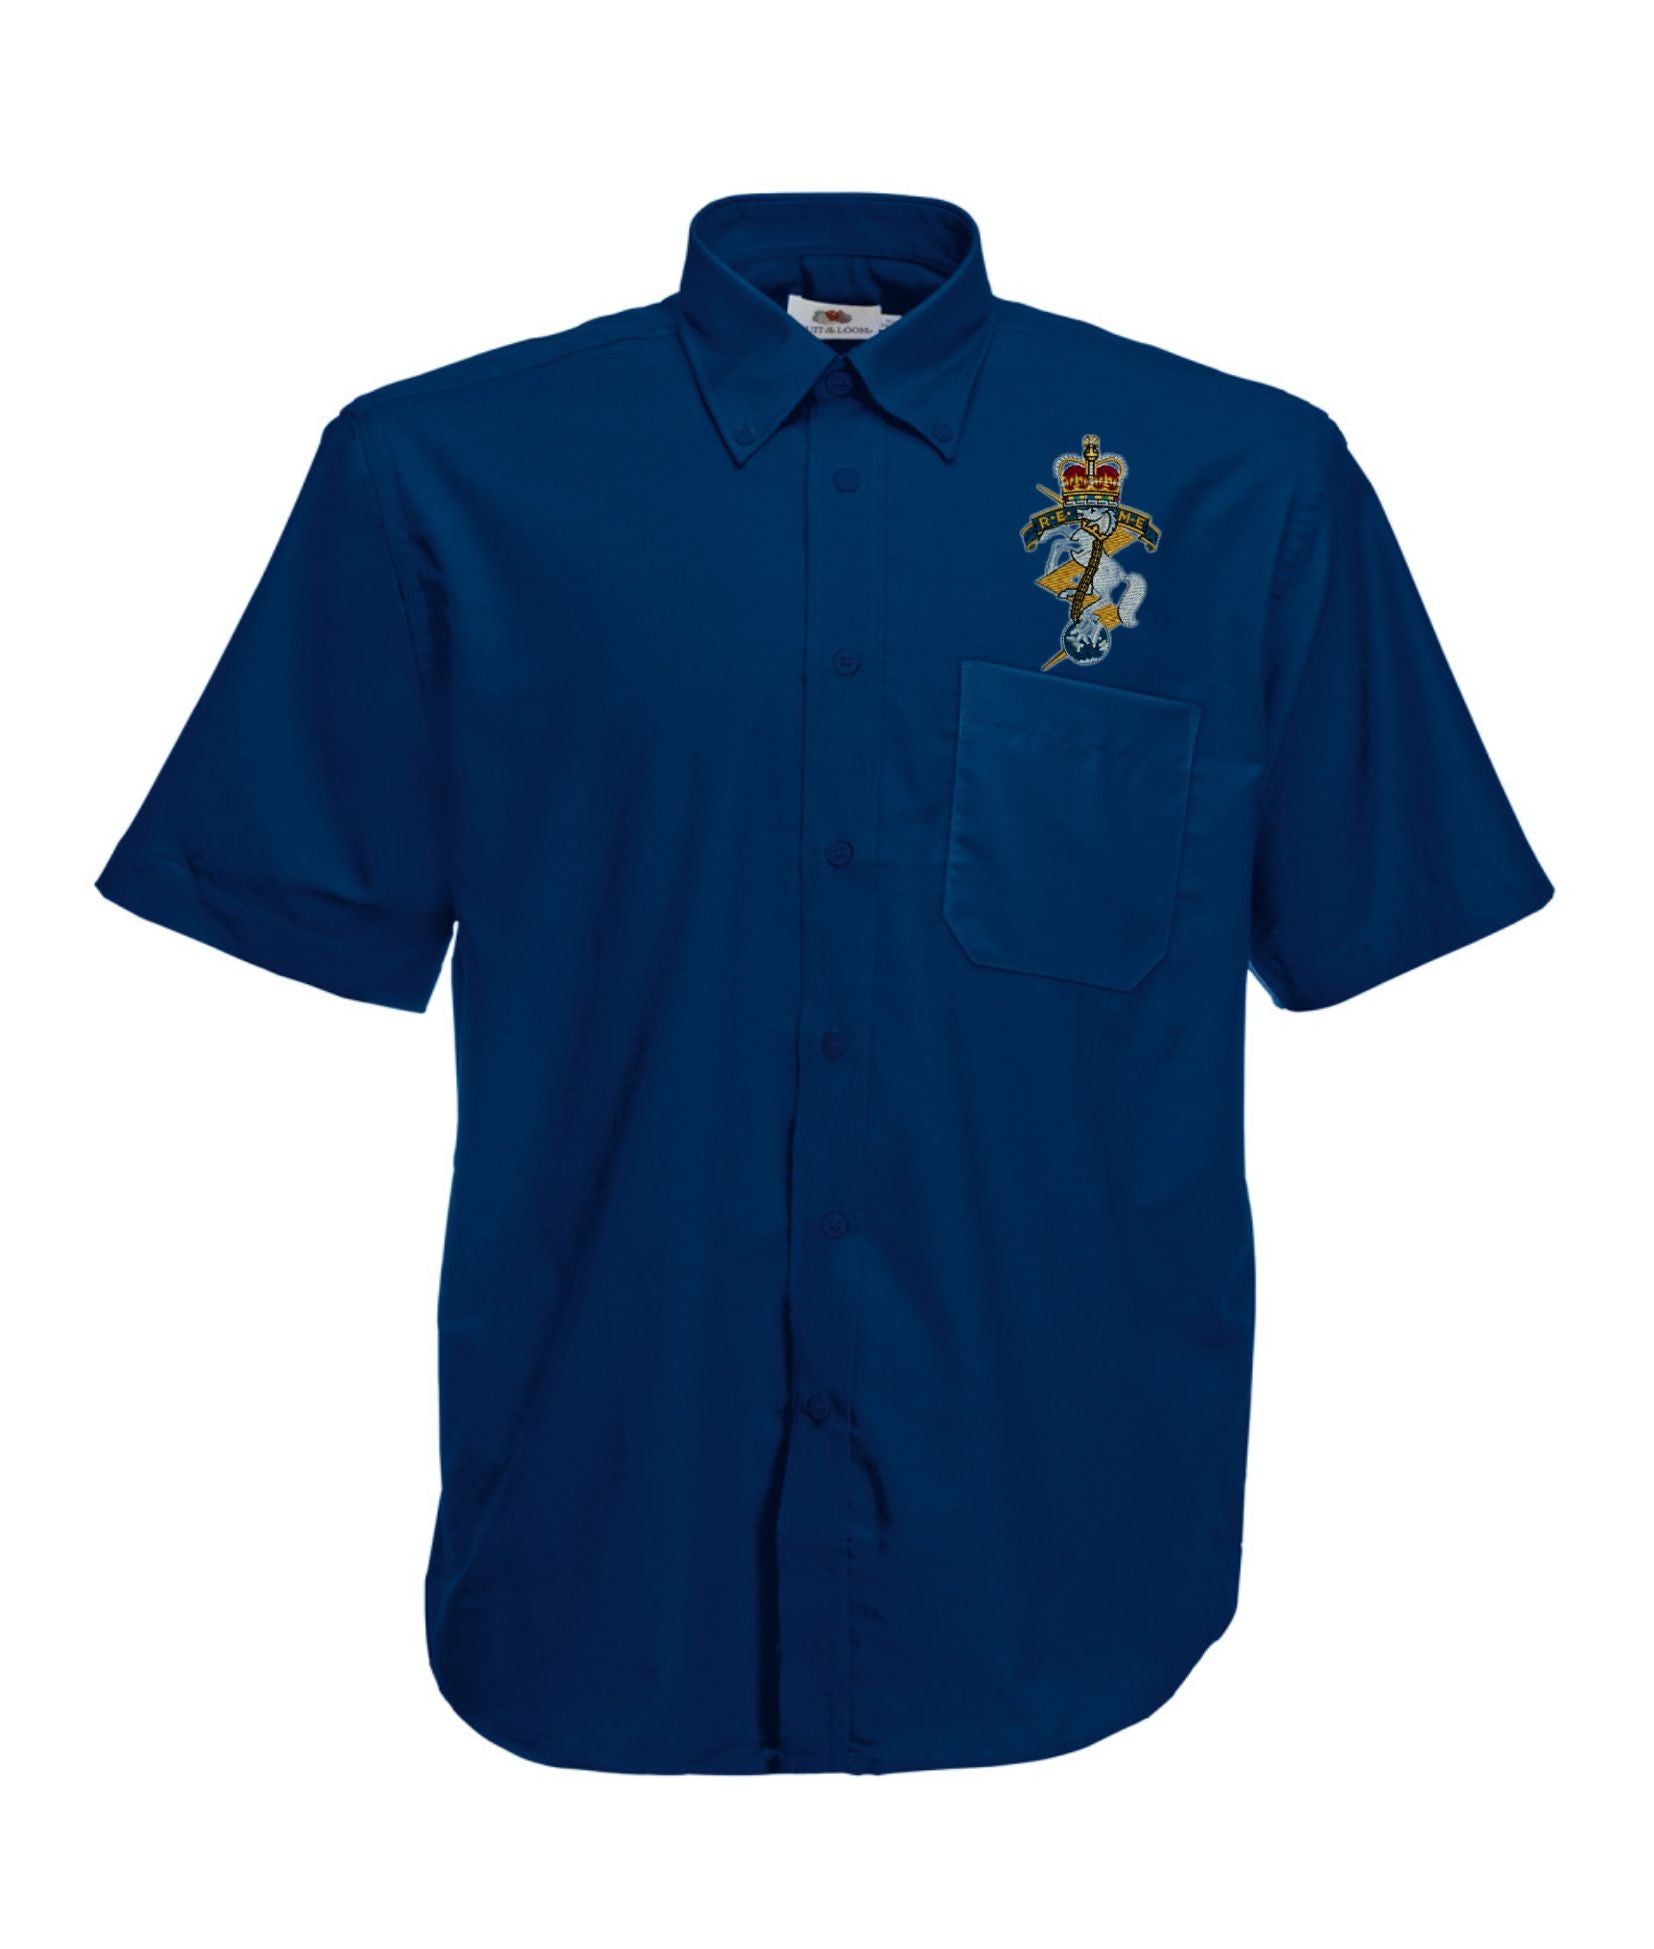 REME (Royal Electrical & Mechanical Engineers) Shirts